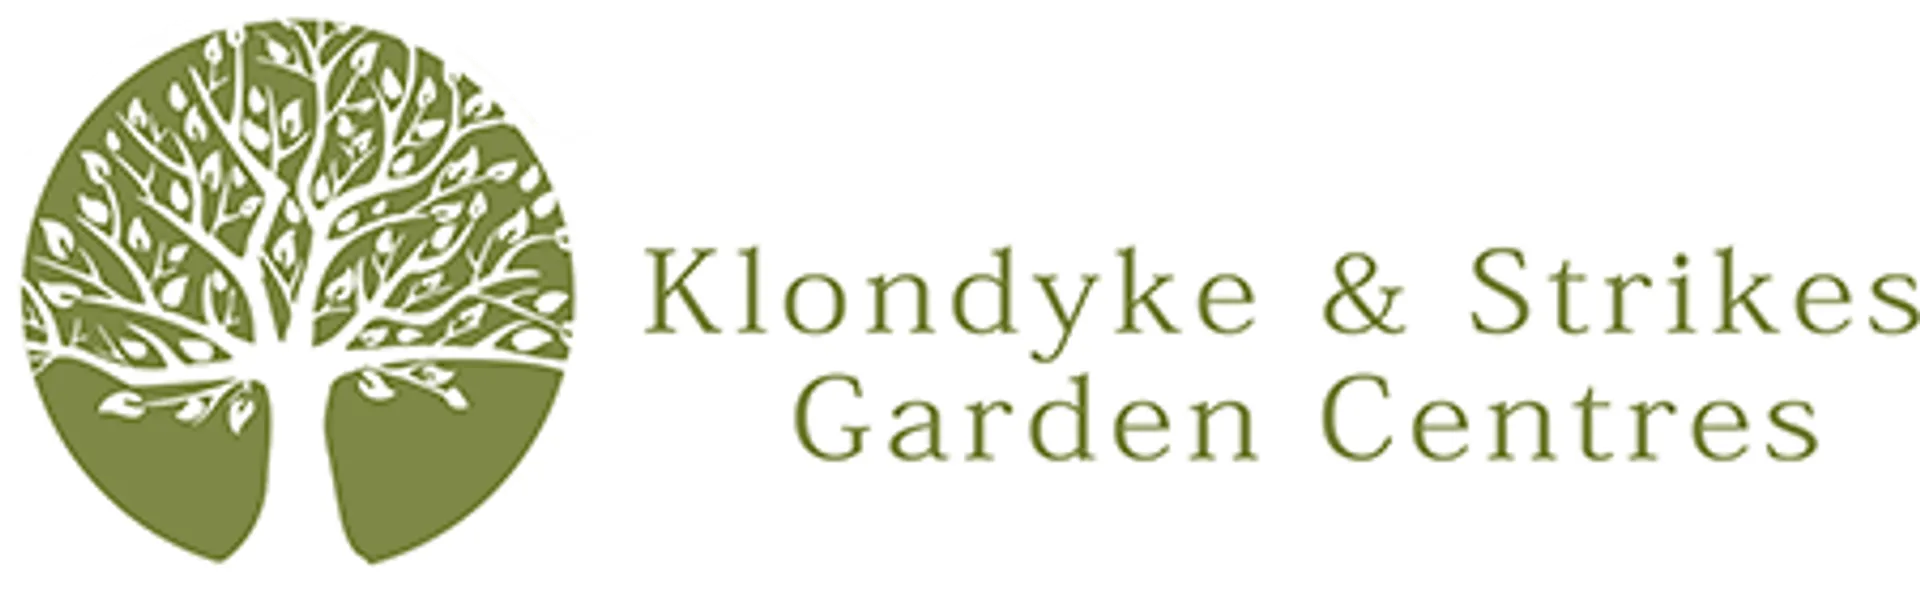 KLONDYKE & STRIKES logo